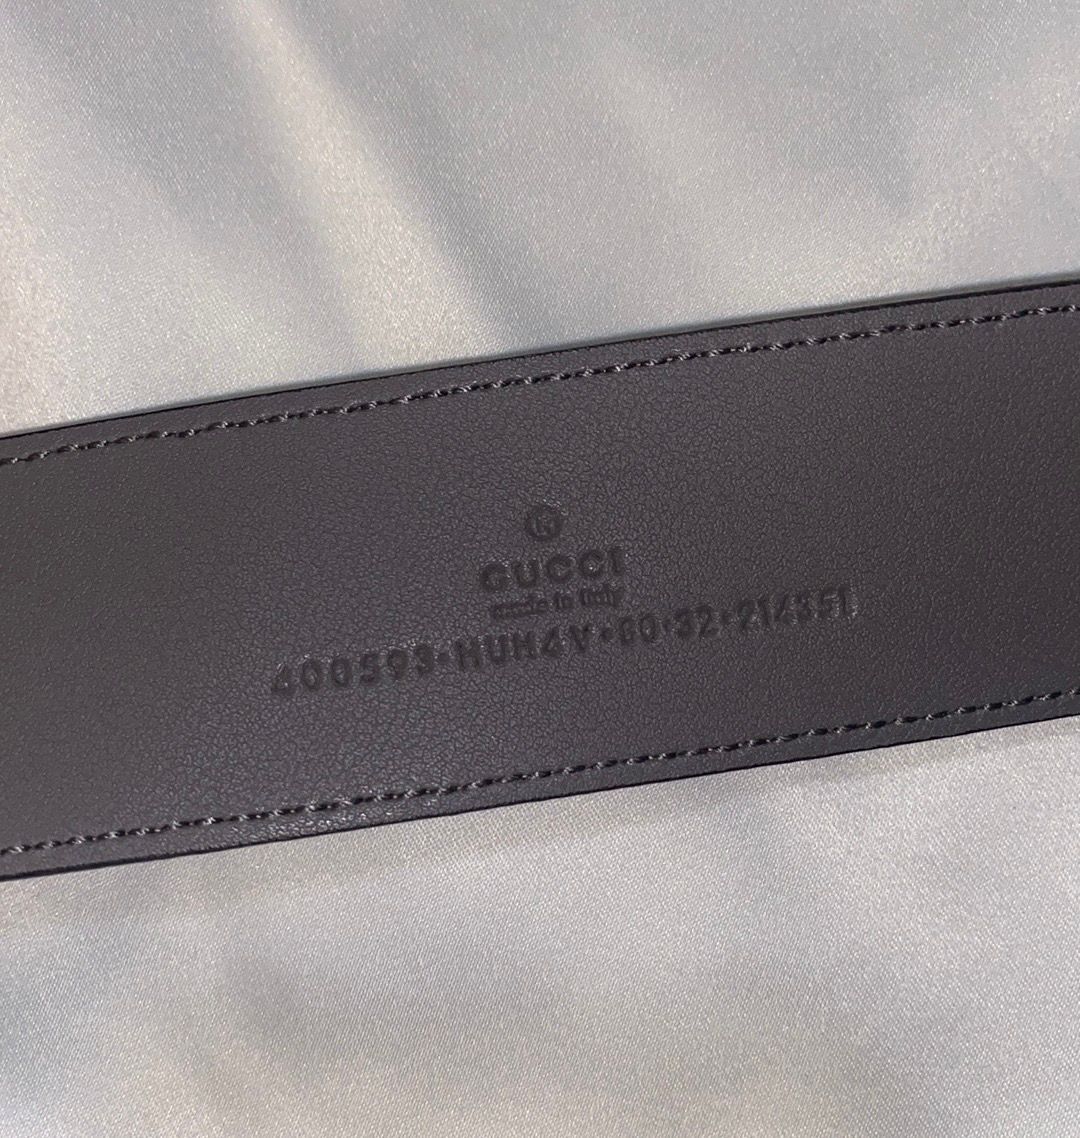 Gucci Gucci GG Marmont Wide Belt Size 80/32 Size 32 - 5 Thumbnail